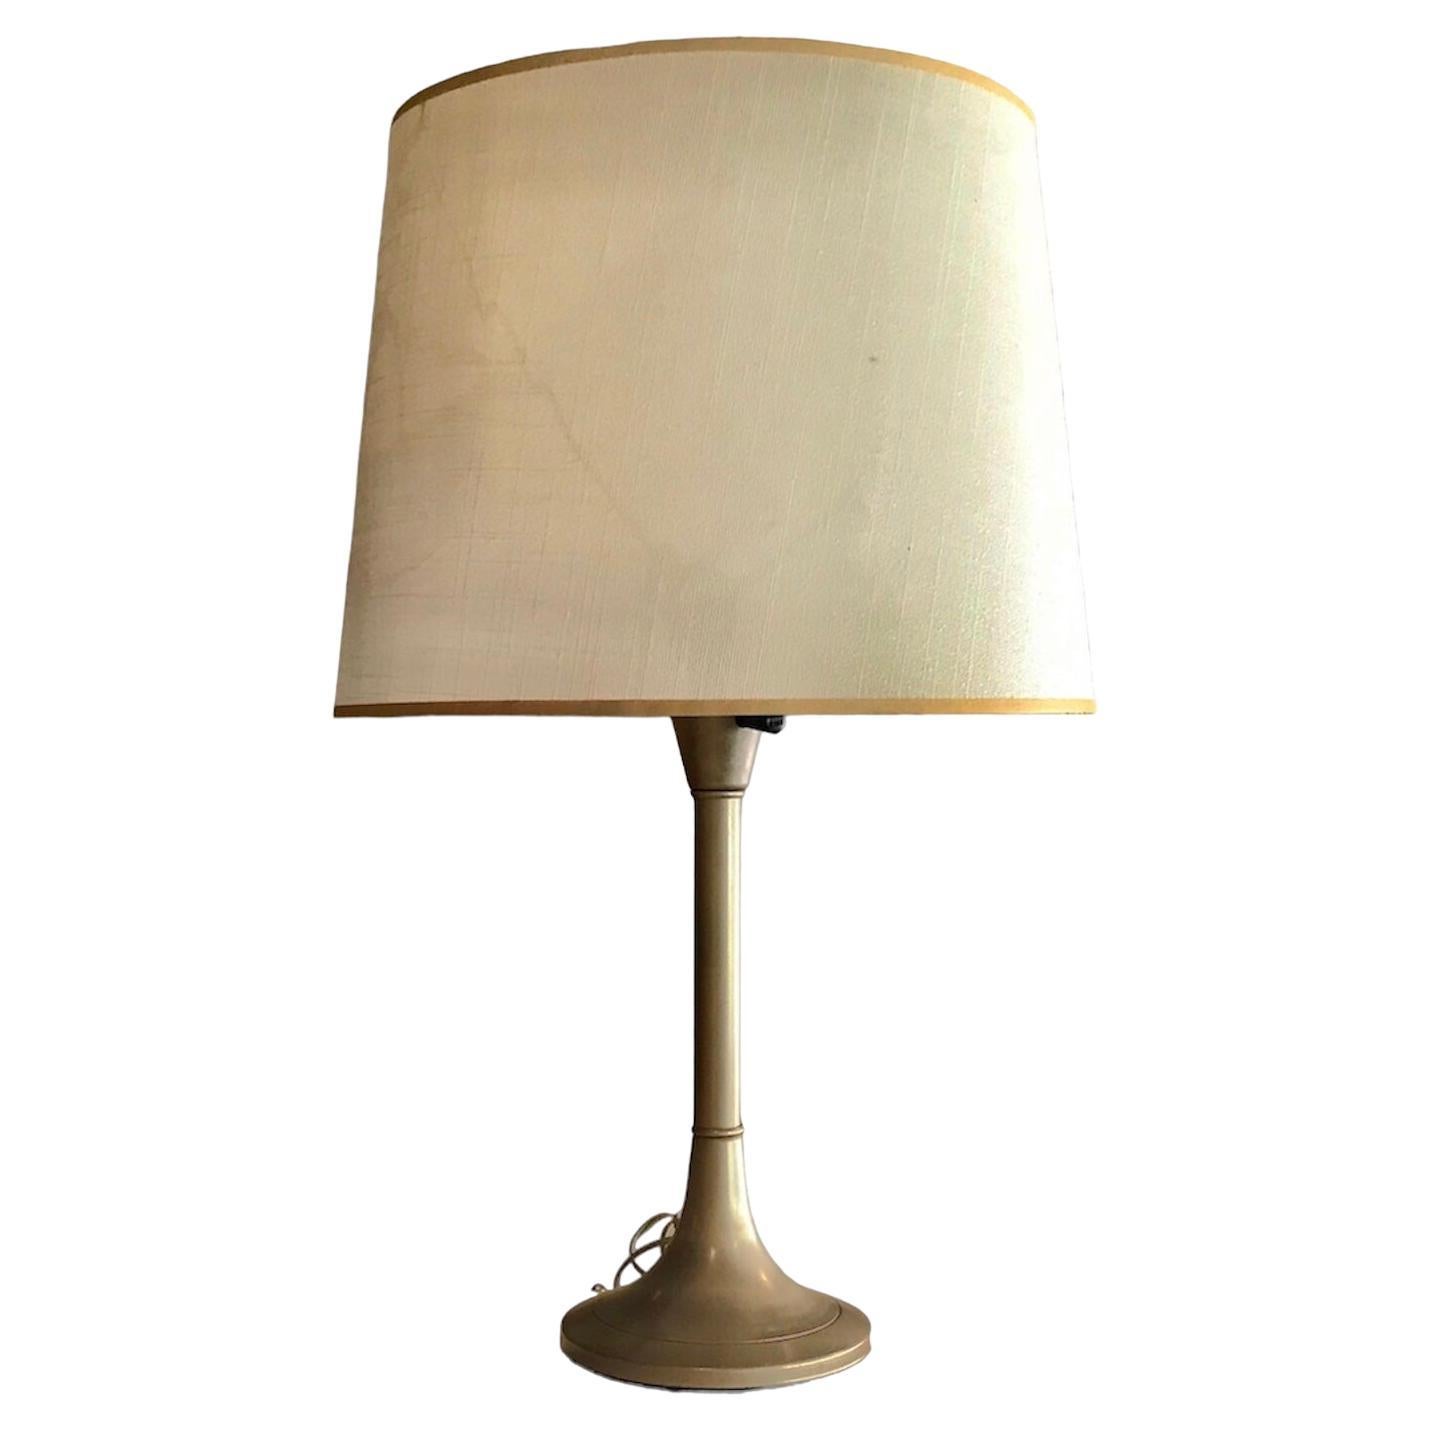 Gerald Thurston Lightolier Style Mid Century Modern Design Desk Lamp 1950s